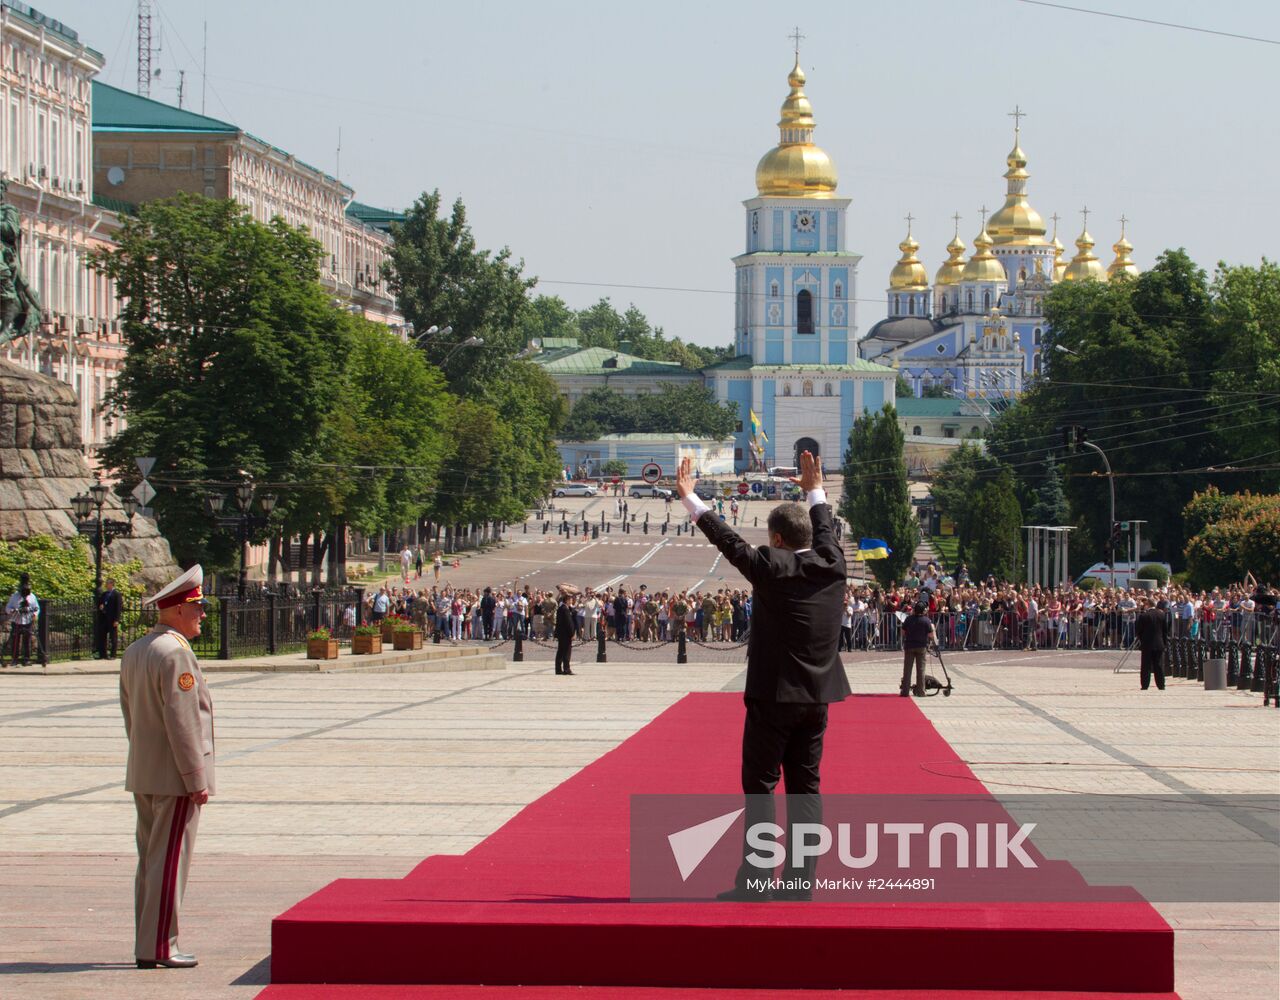 Petro Poroshenko inaugurated as President of Ukraine